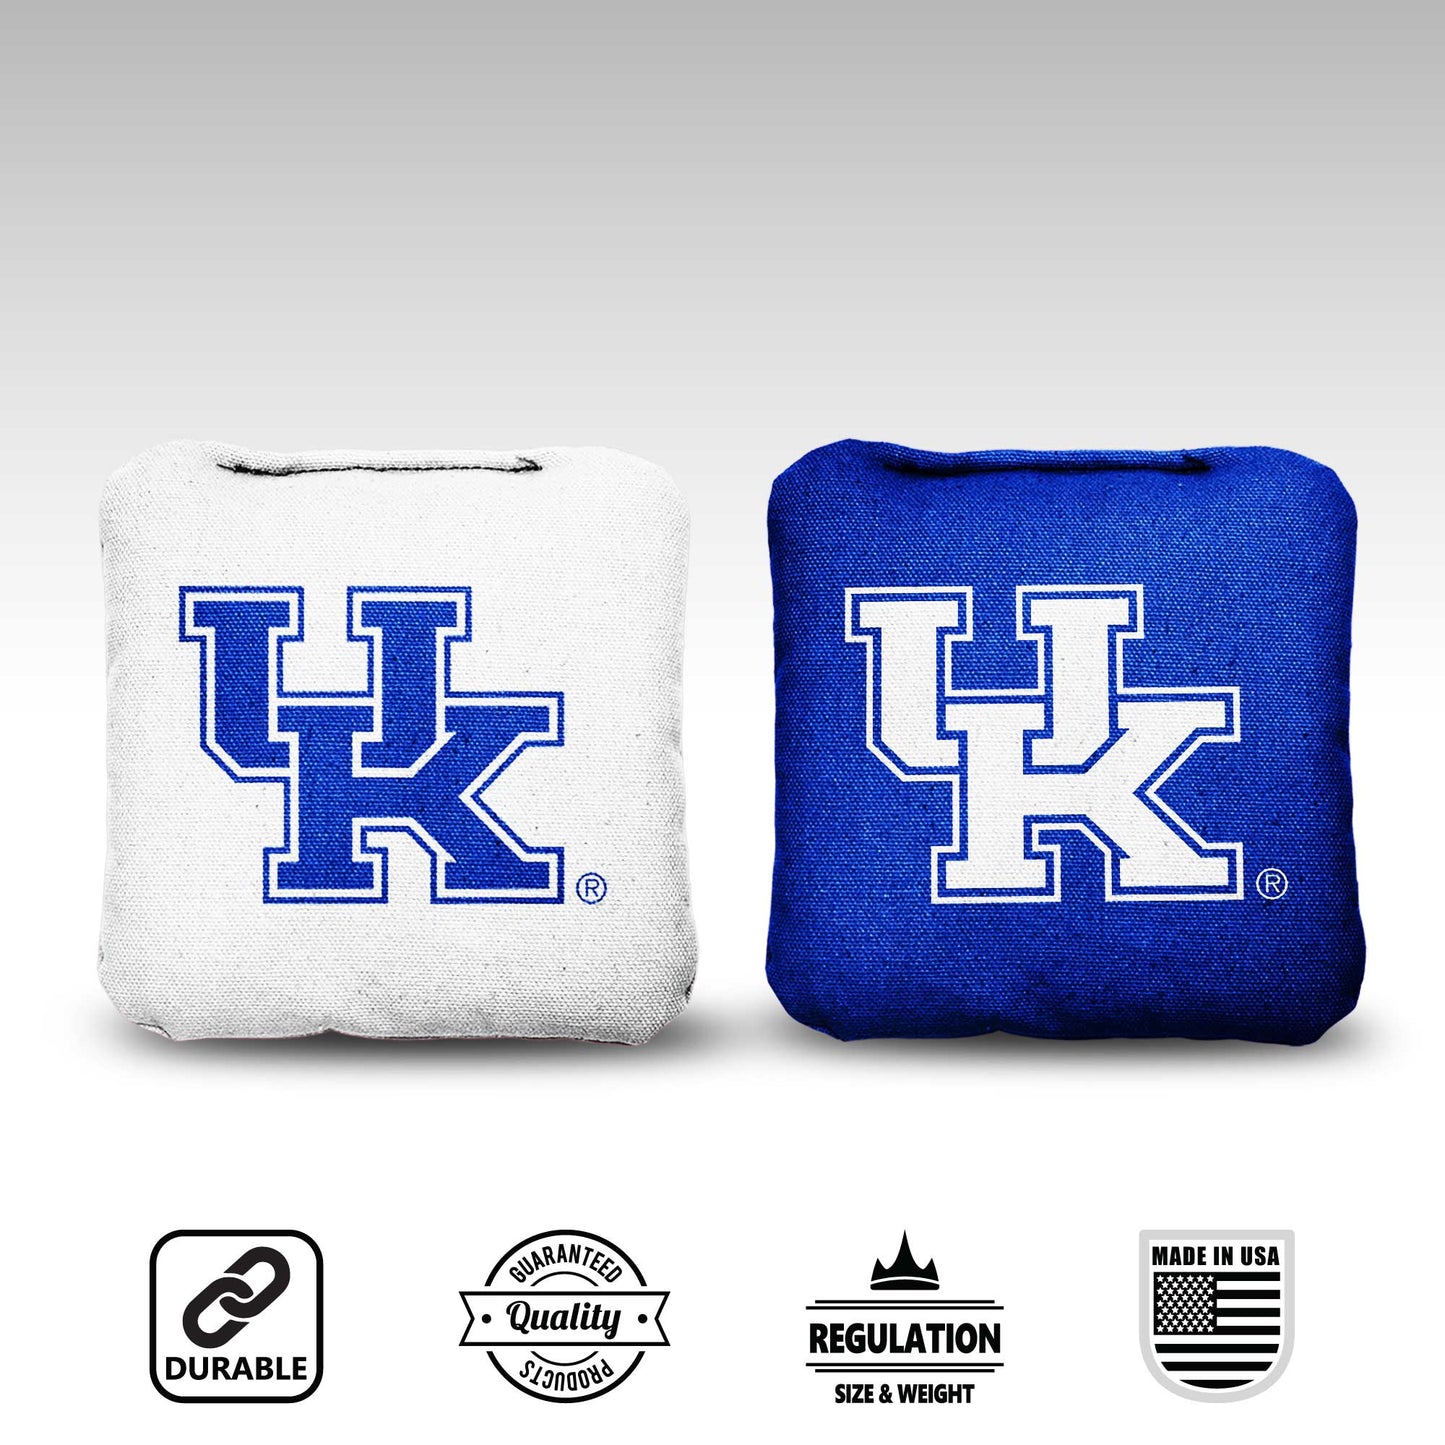 University of Kentucky Cornhole Bags - 8 Cornhole Bags